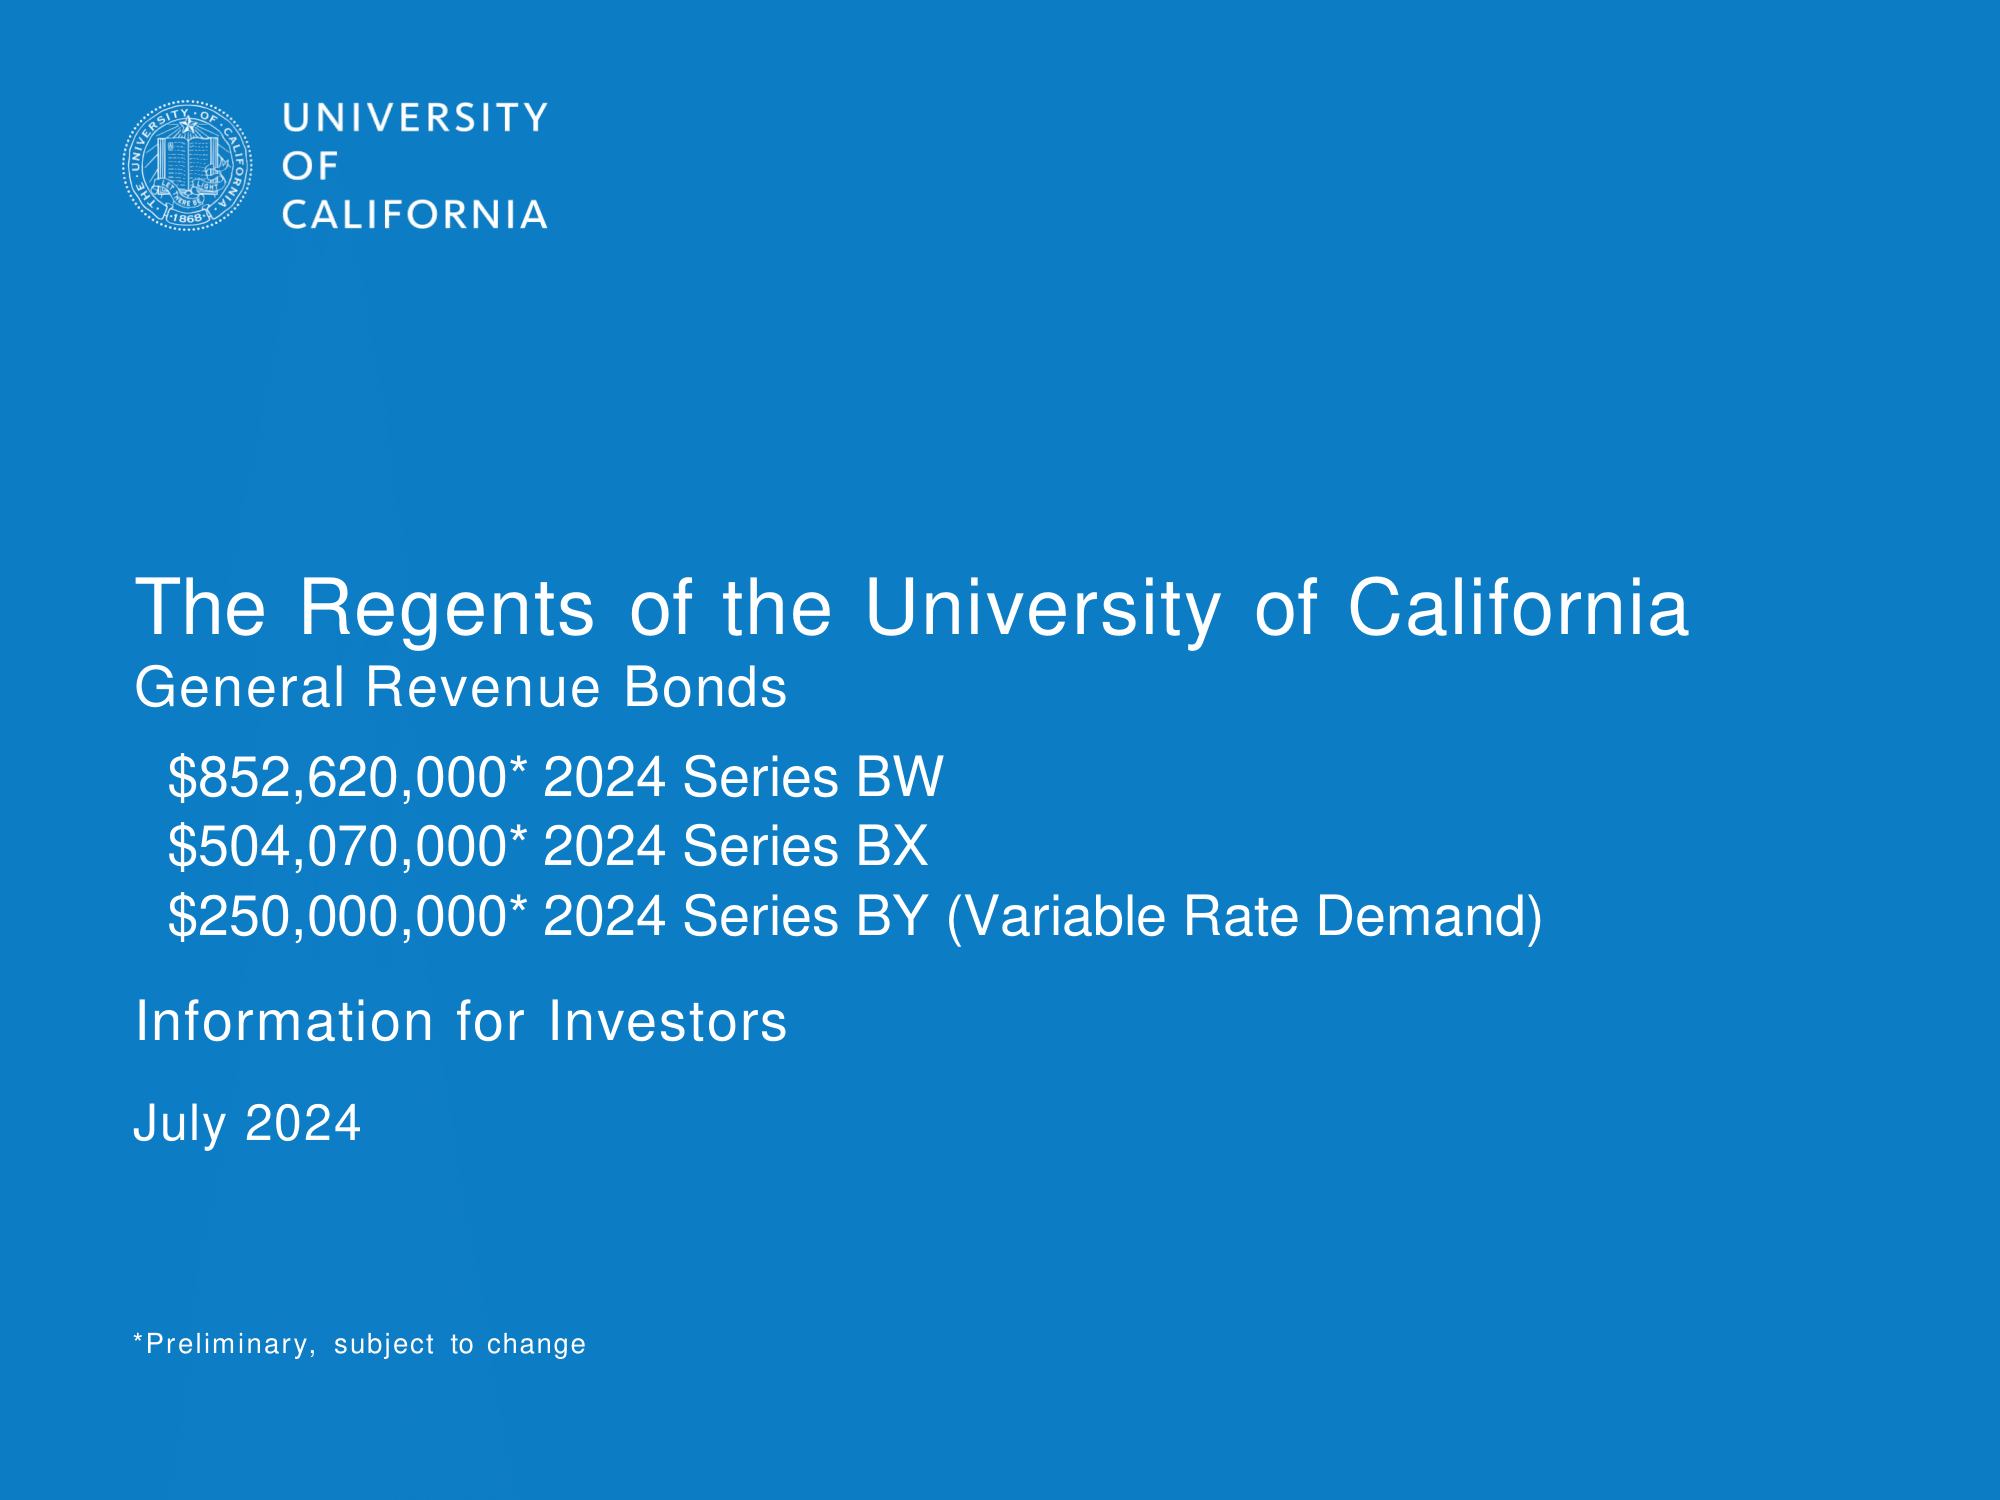 Roadshow for University of California